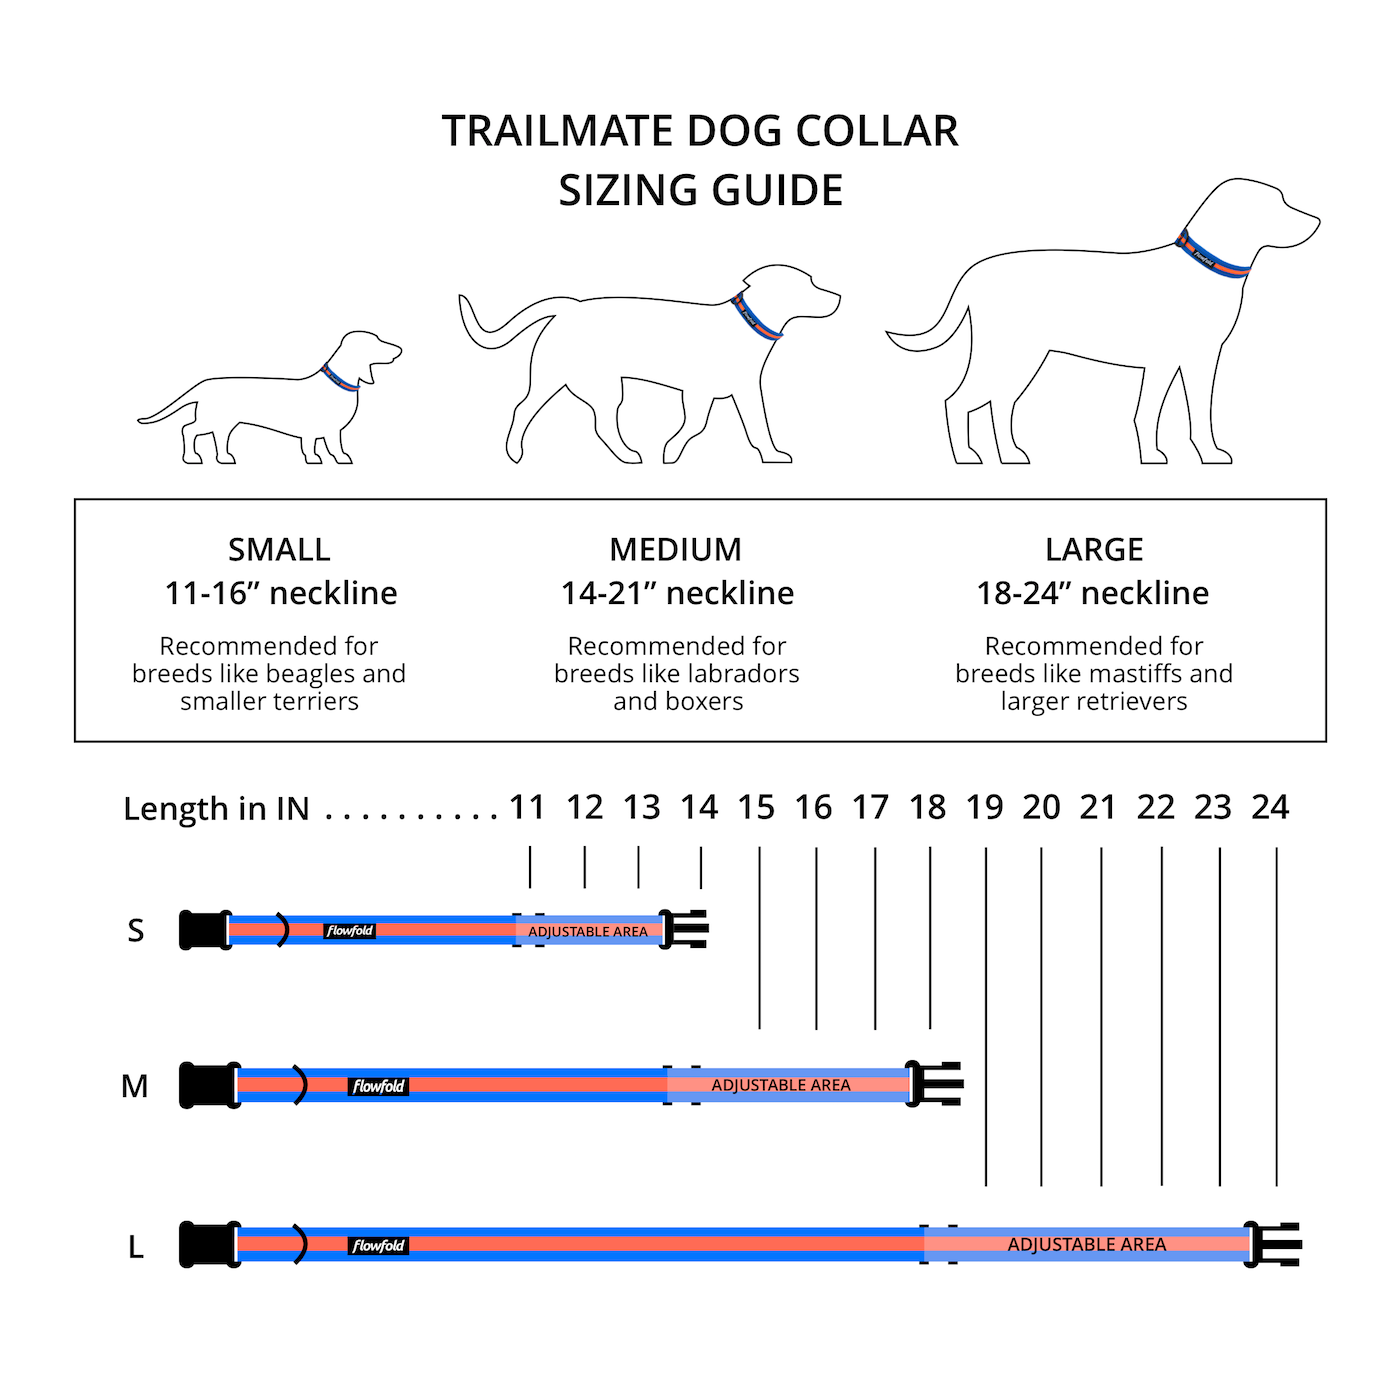 Flowfold Aqua/Fucshia Trailmate Dog Collar Waterproof dog collar made in USA, no odor, washable 